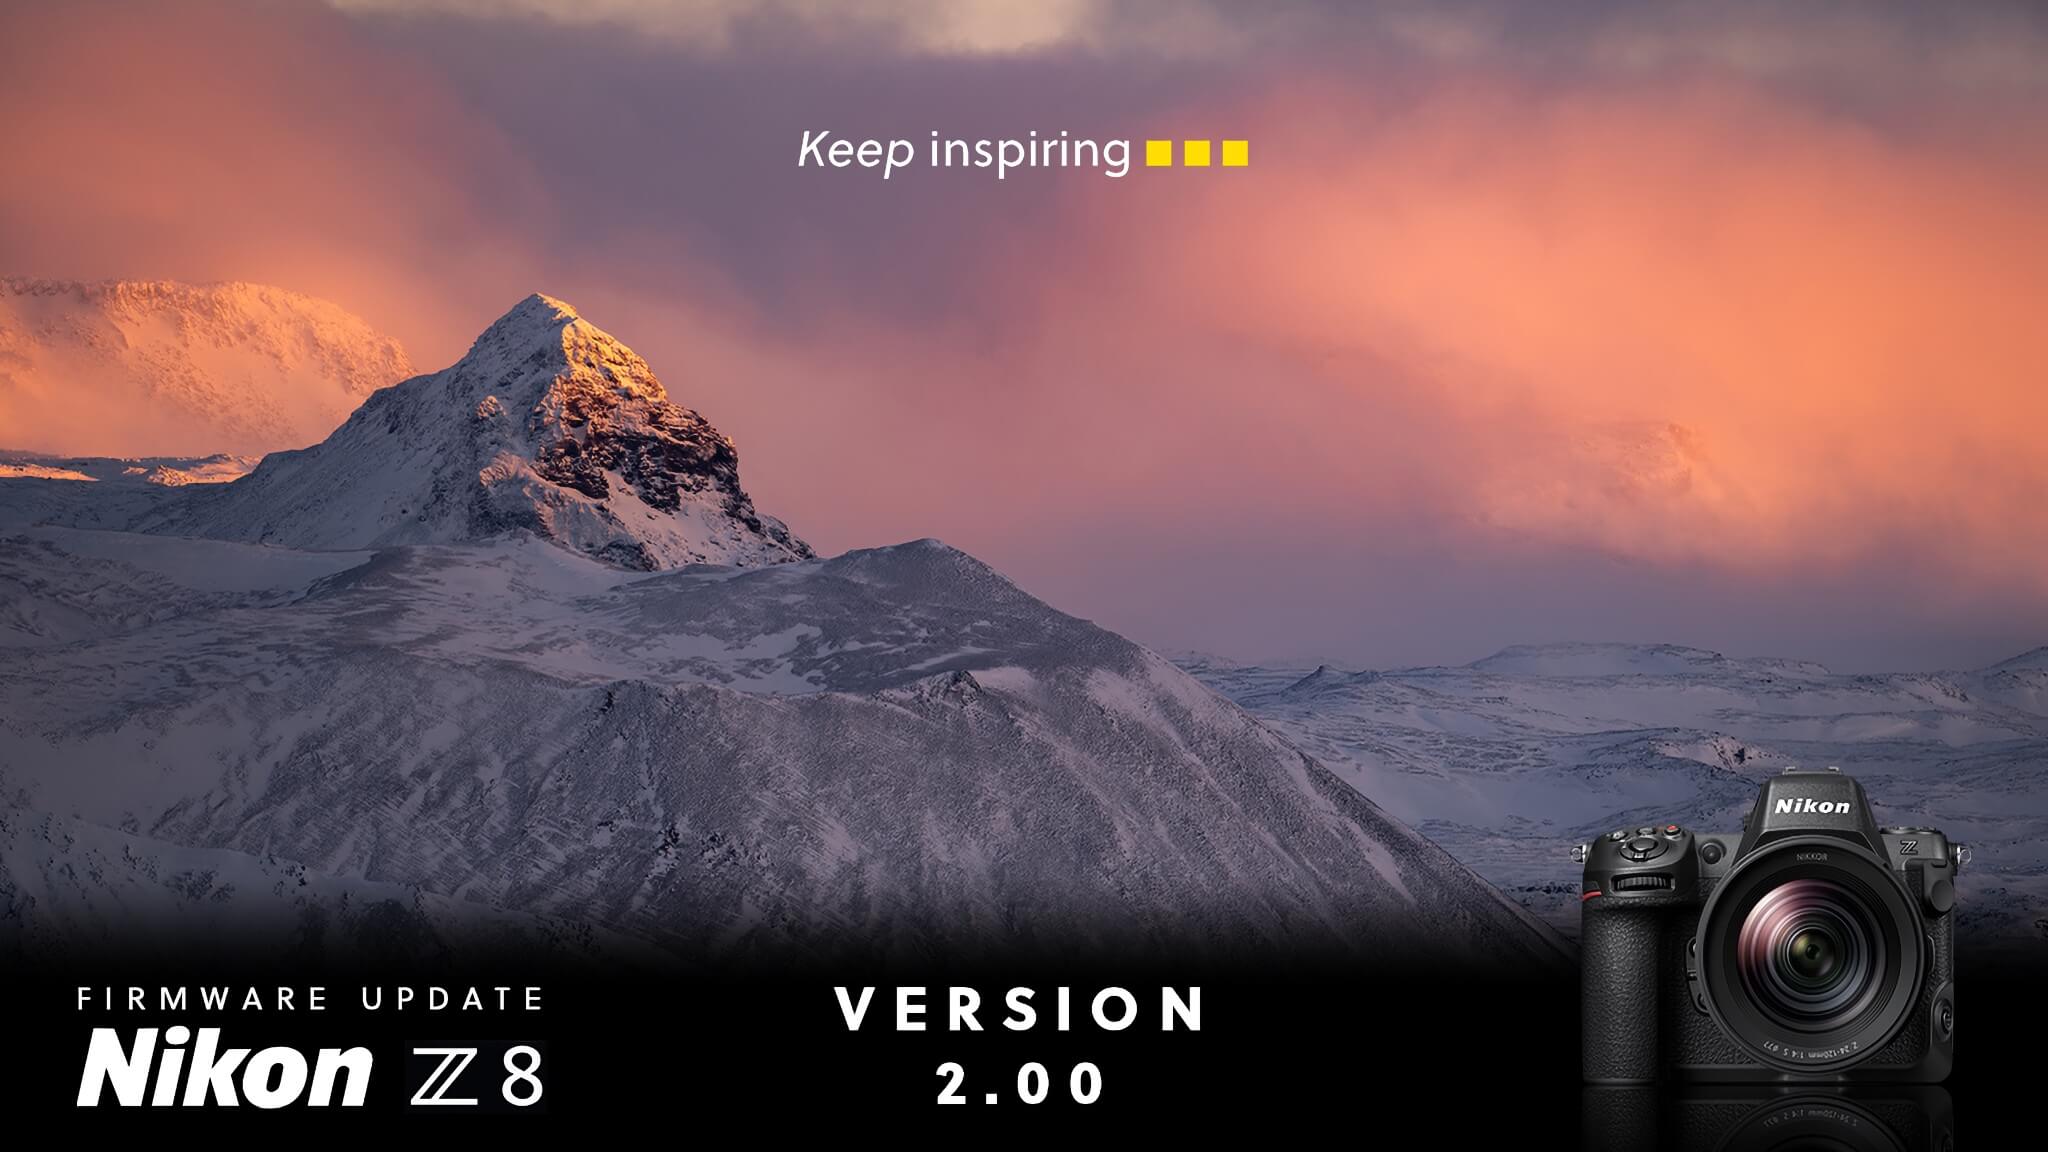 Velký skok pro… Upgrade firmwaru Nikon Z 8 na verzi 2.0